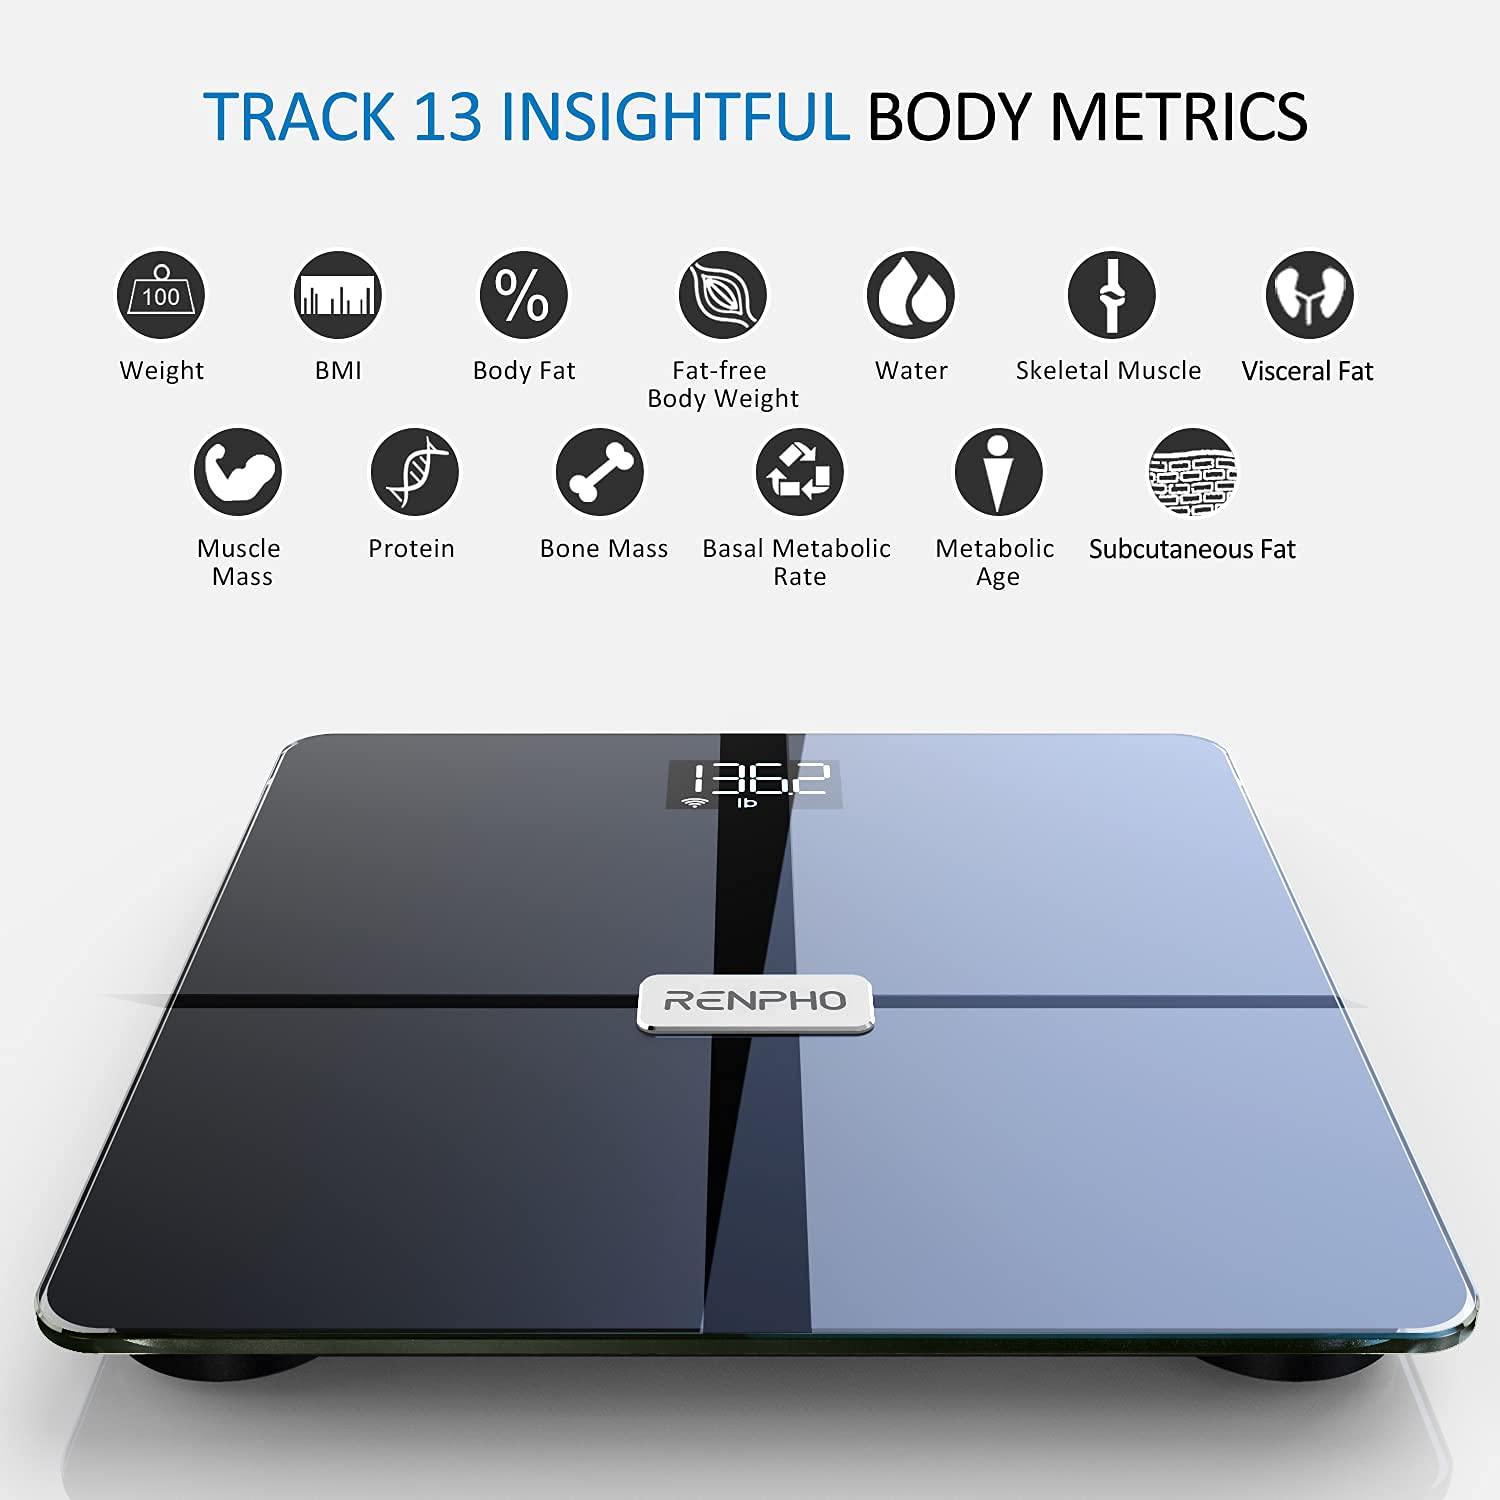 RENPHO Wi-Fi Bluetooth Scale Smart Digital Bathroom Weight BMI Body Fat  Scale Tracks 13 Metrics, Wireless Body Composition Analysis & Health  Monitor